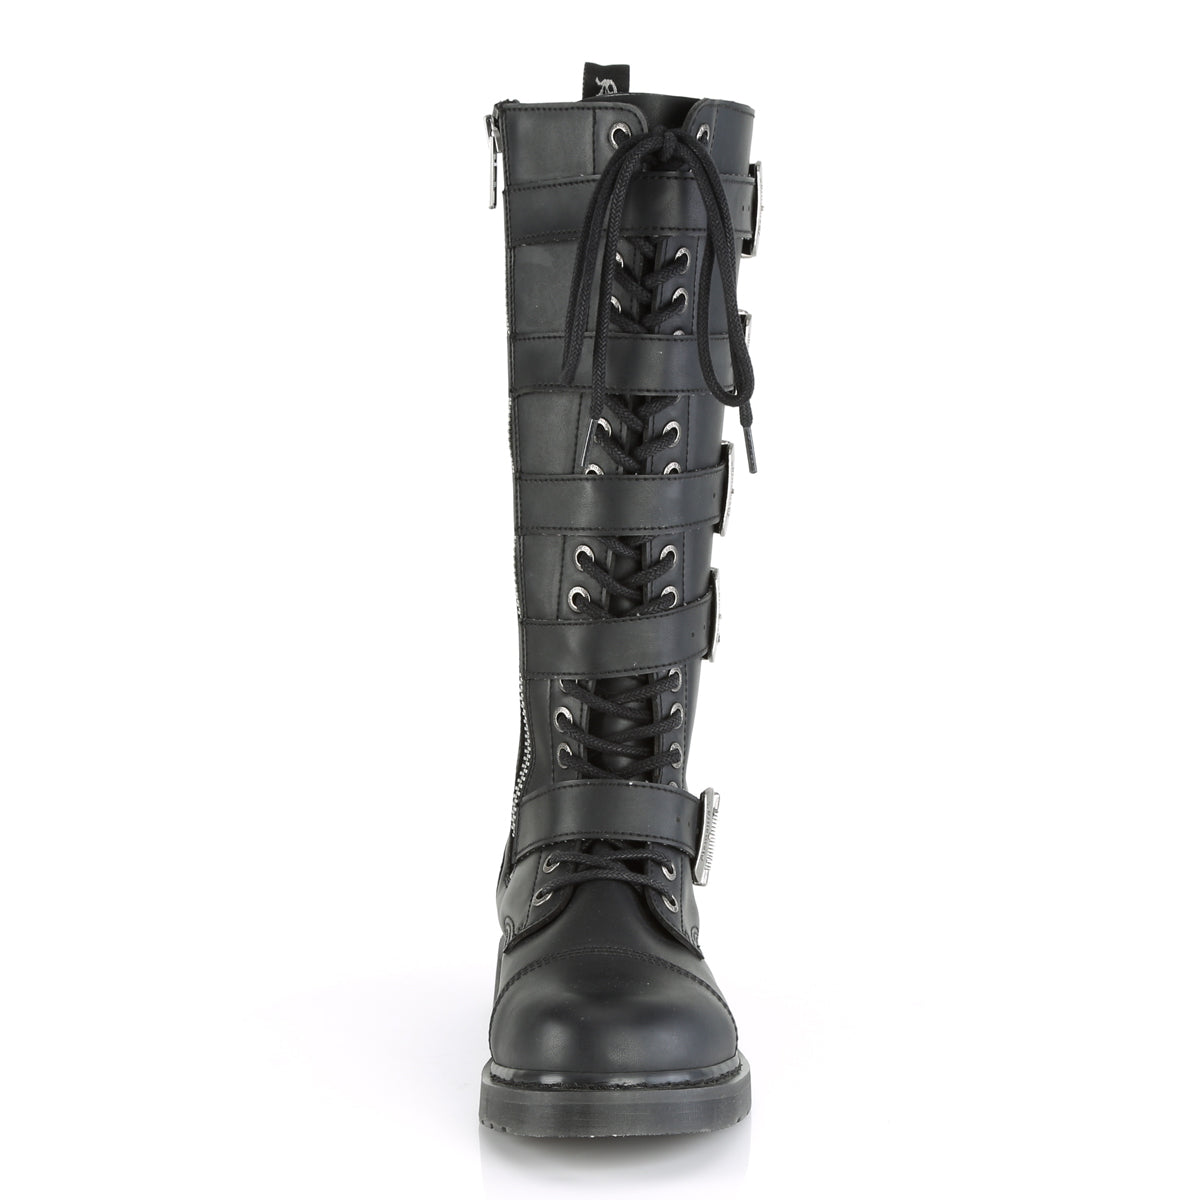 Men gothic boots - Demonia Bolt-425